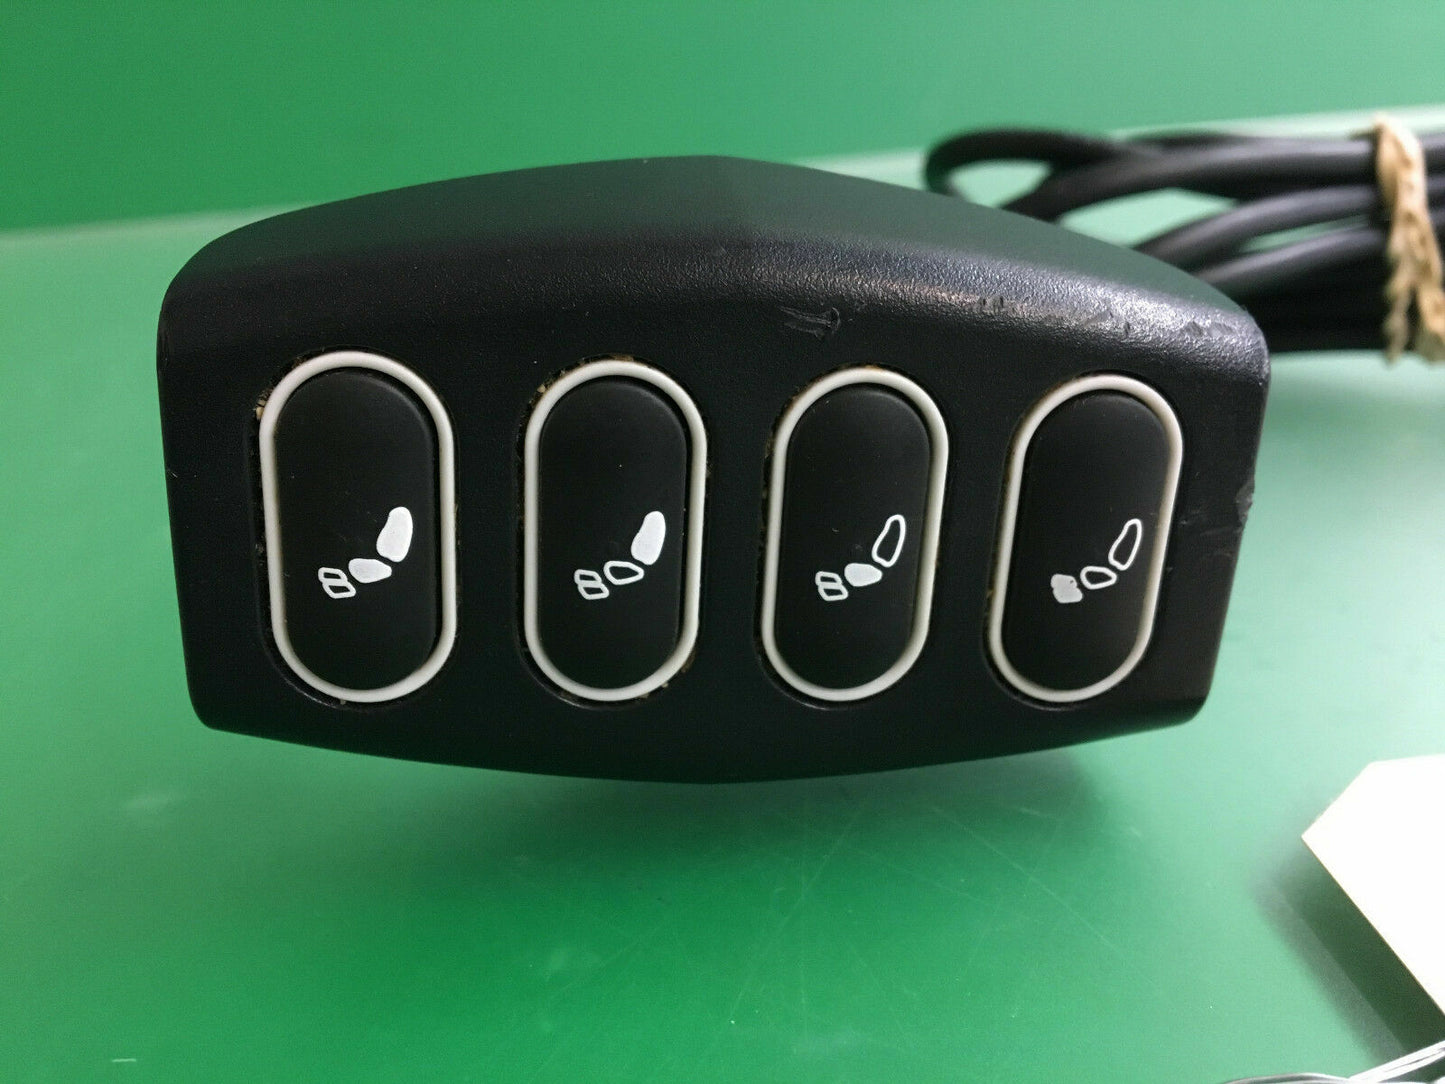 Pride Mobility Quantum Q6 Q-Logic power seat control keypad CTL123218 #B019